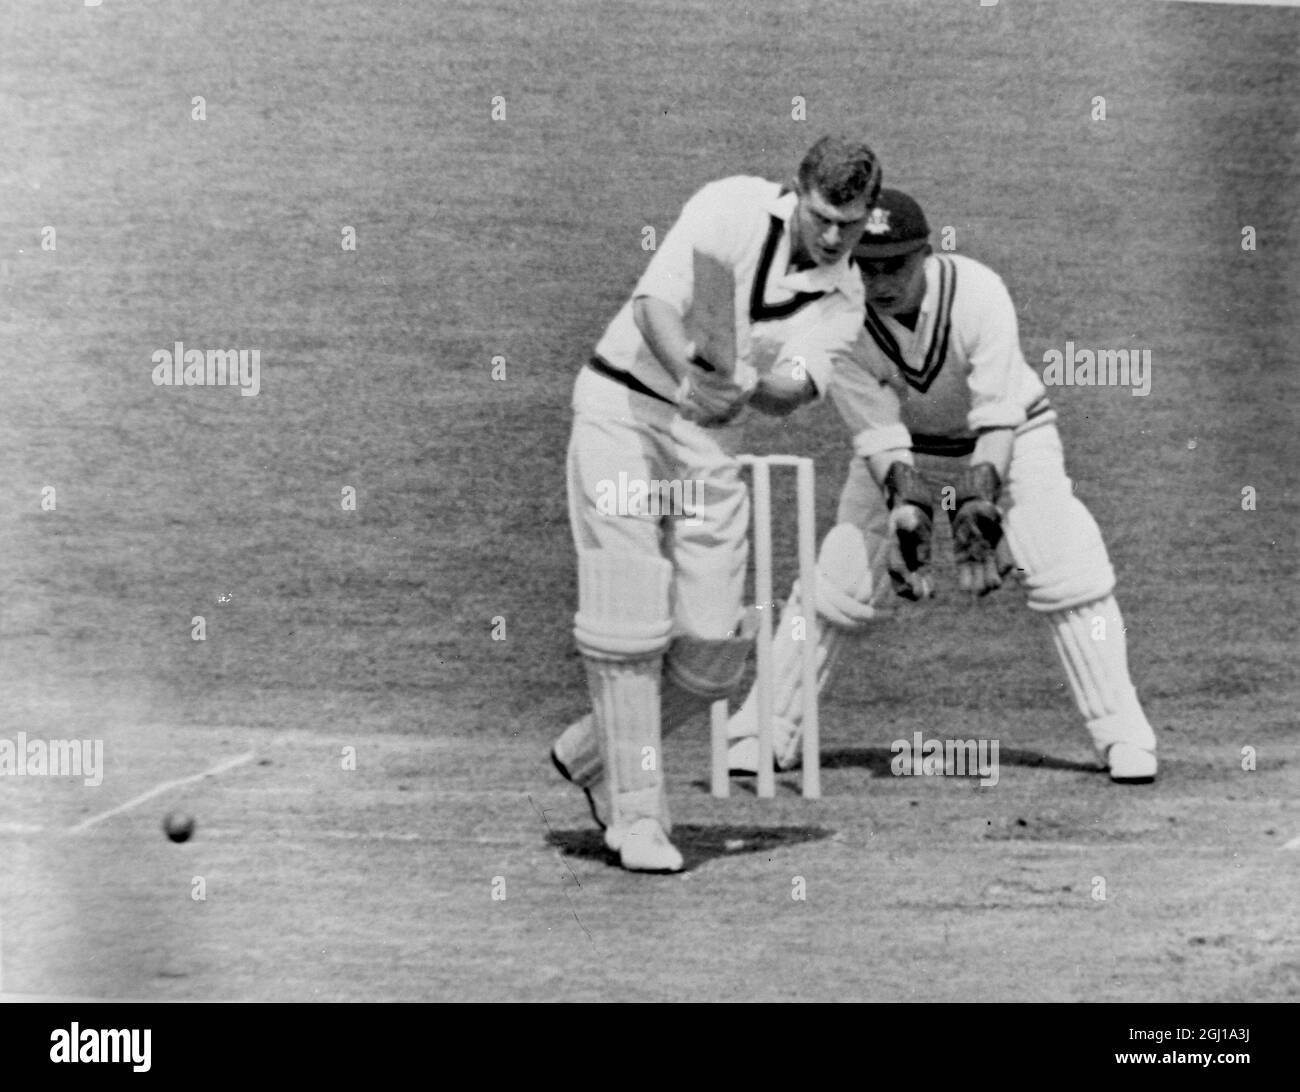 CRICKET AUSTRALIA V NOTTINGHAM REDPATH DRIVES BALL PAST MID ON ; 14 MAY 1964 Stock Photo